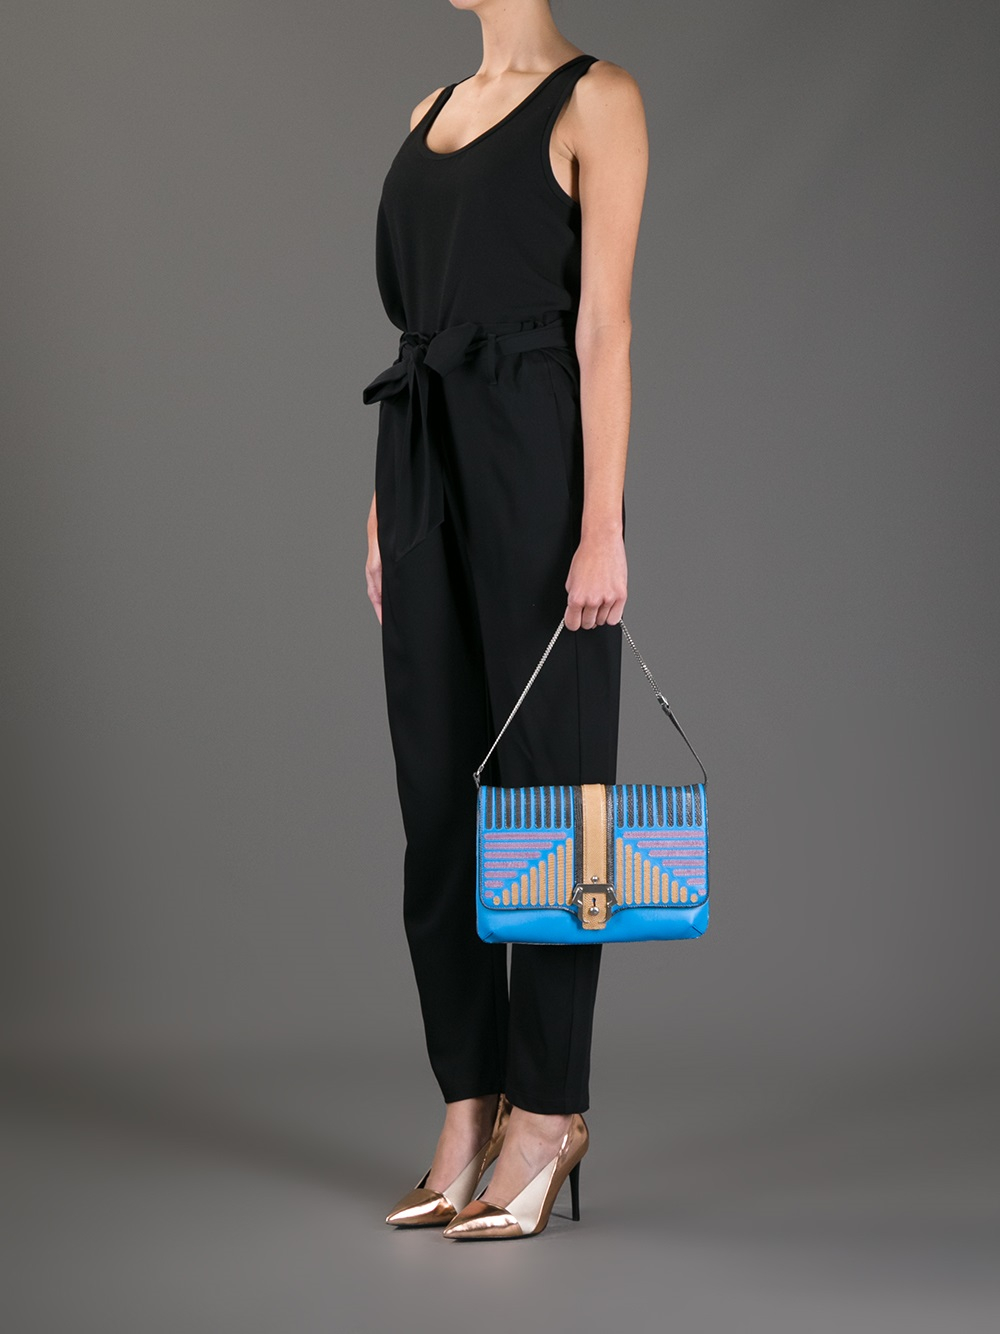 Lyst - Paula Cademartori Patterned Shoulder Bag in Blue